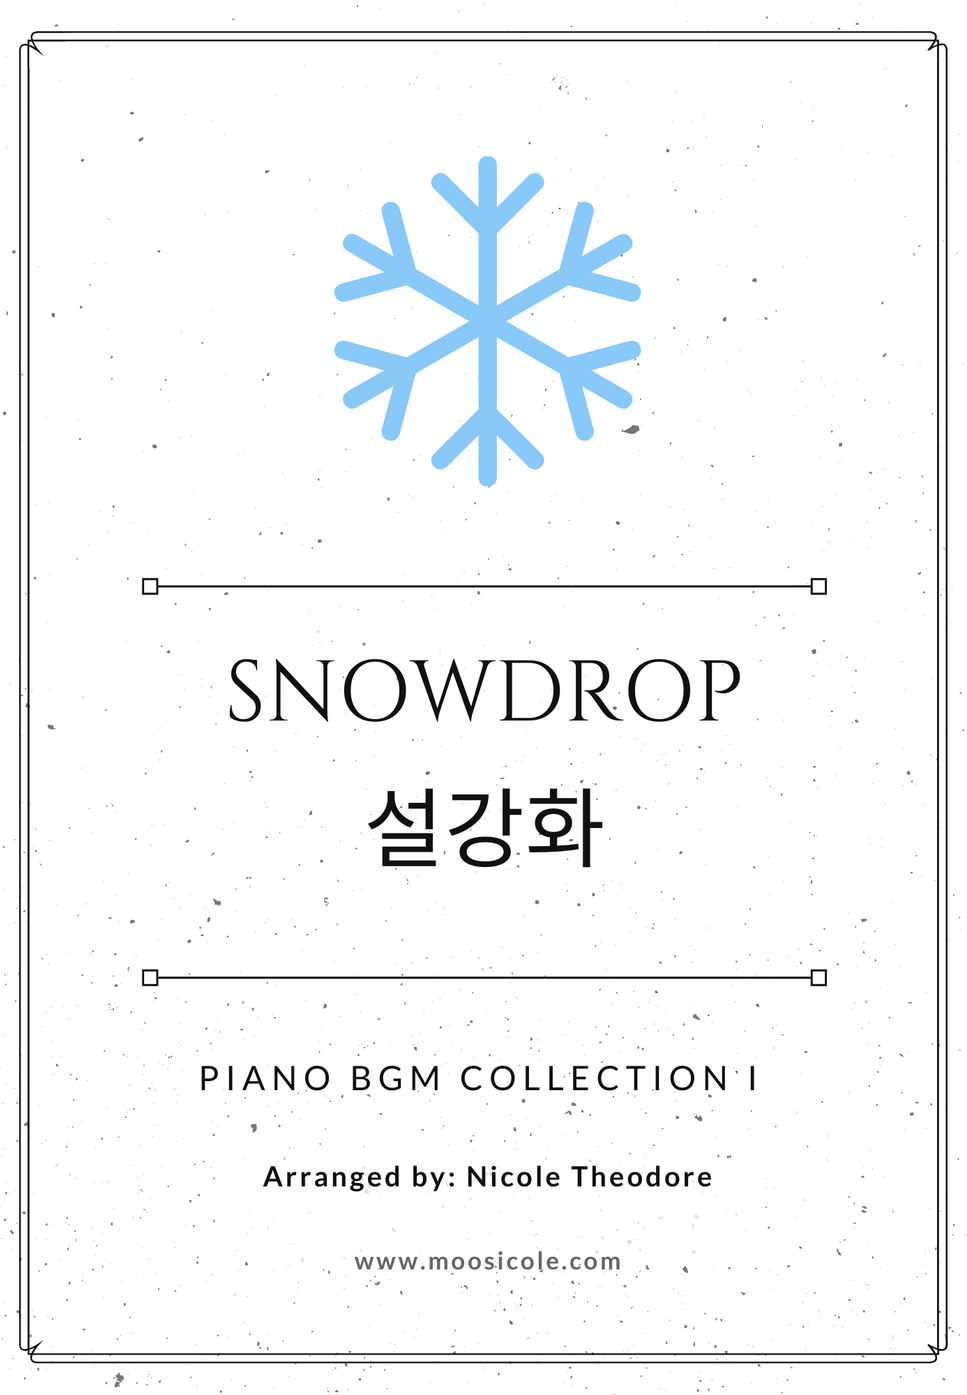 Snowdrop - Snowdrop Piano BGM Album I by Nicole Theodore (moosicole)